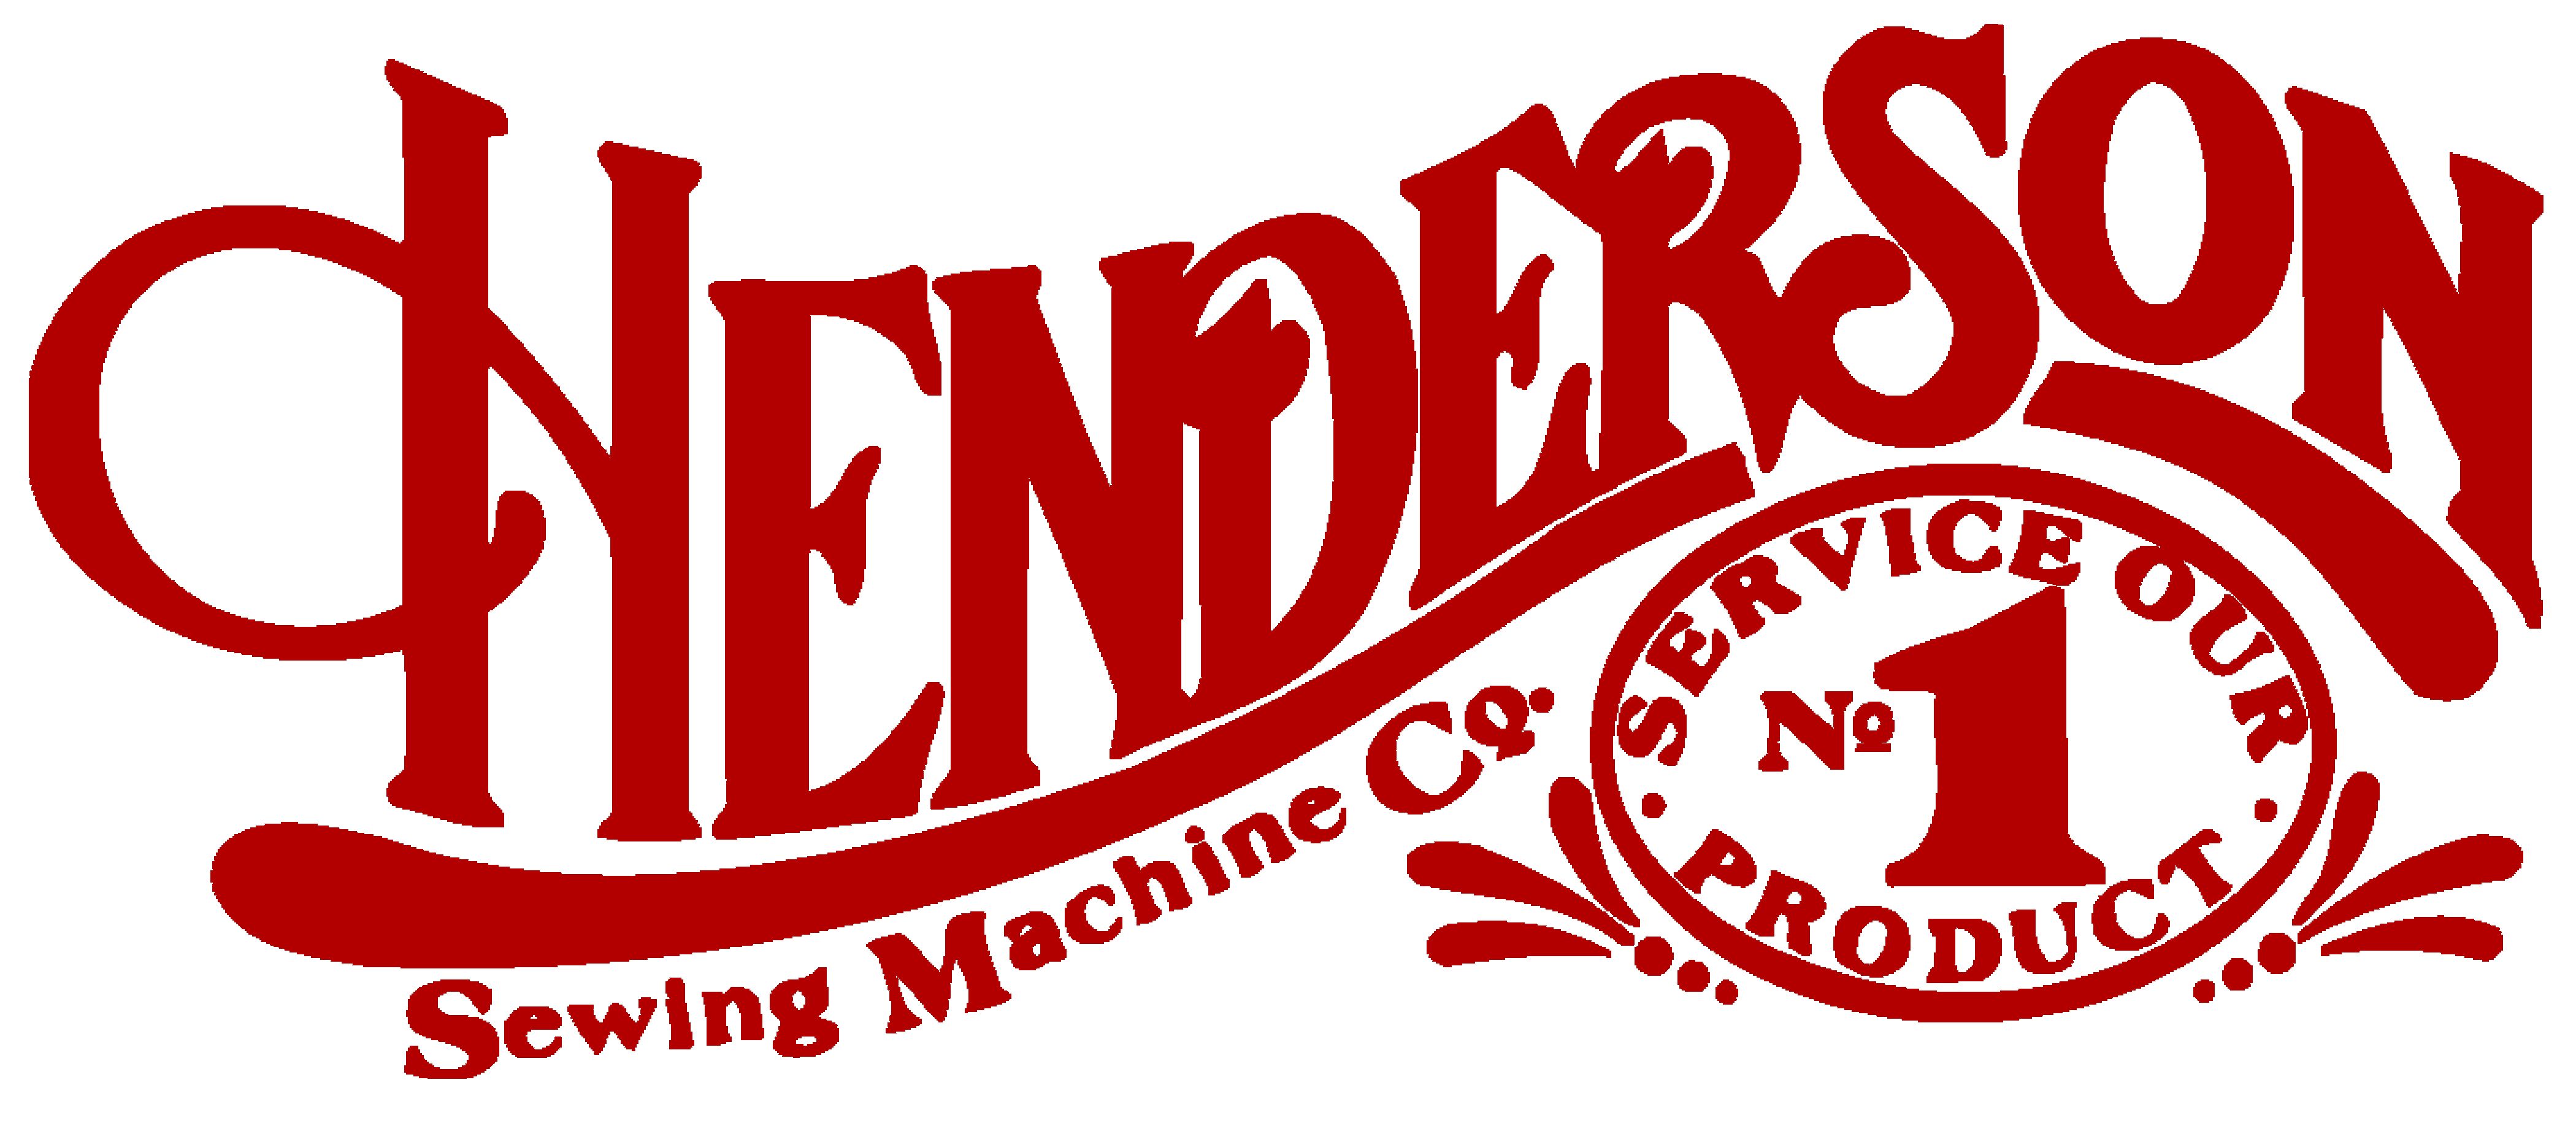 Henderson Sewing Machine Co.